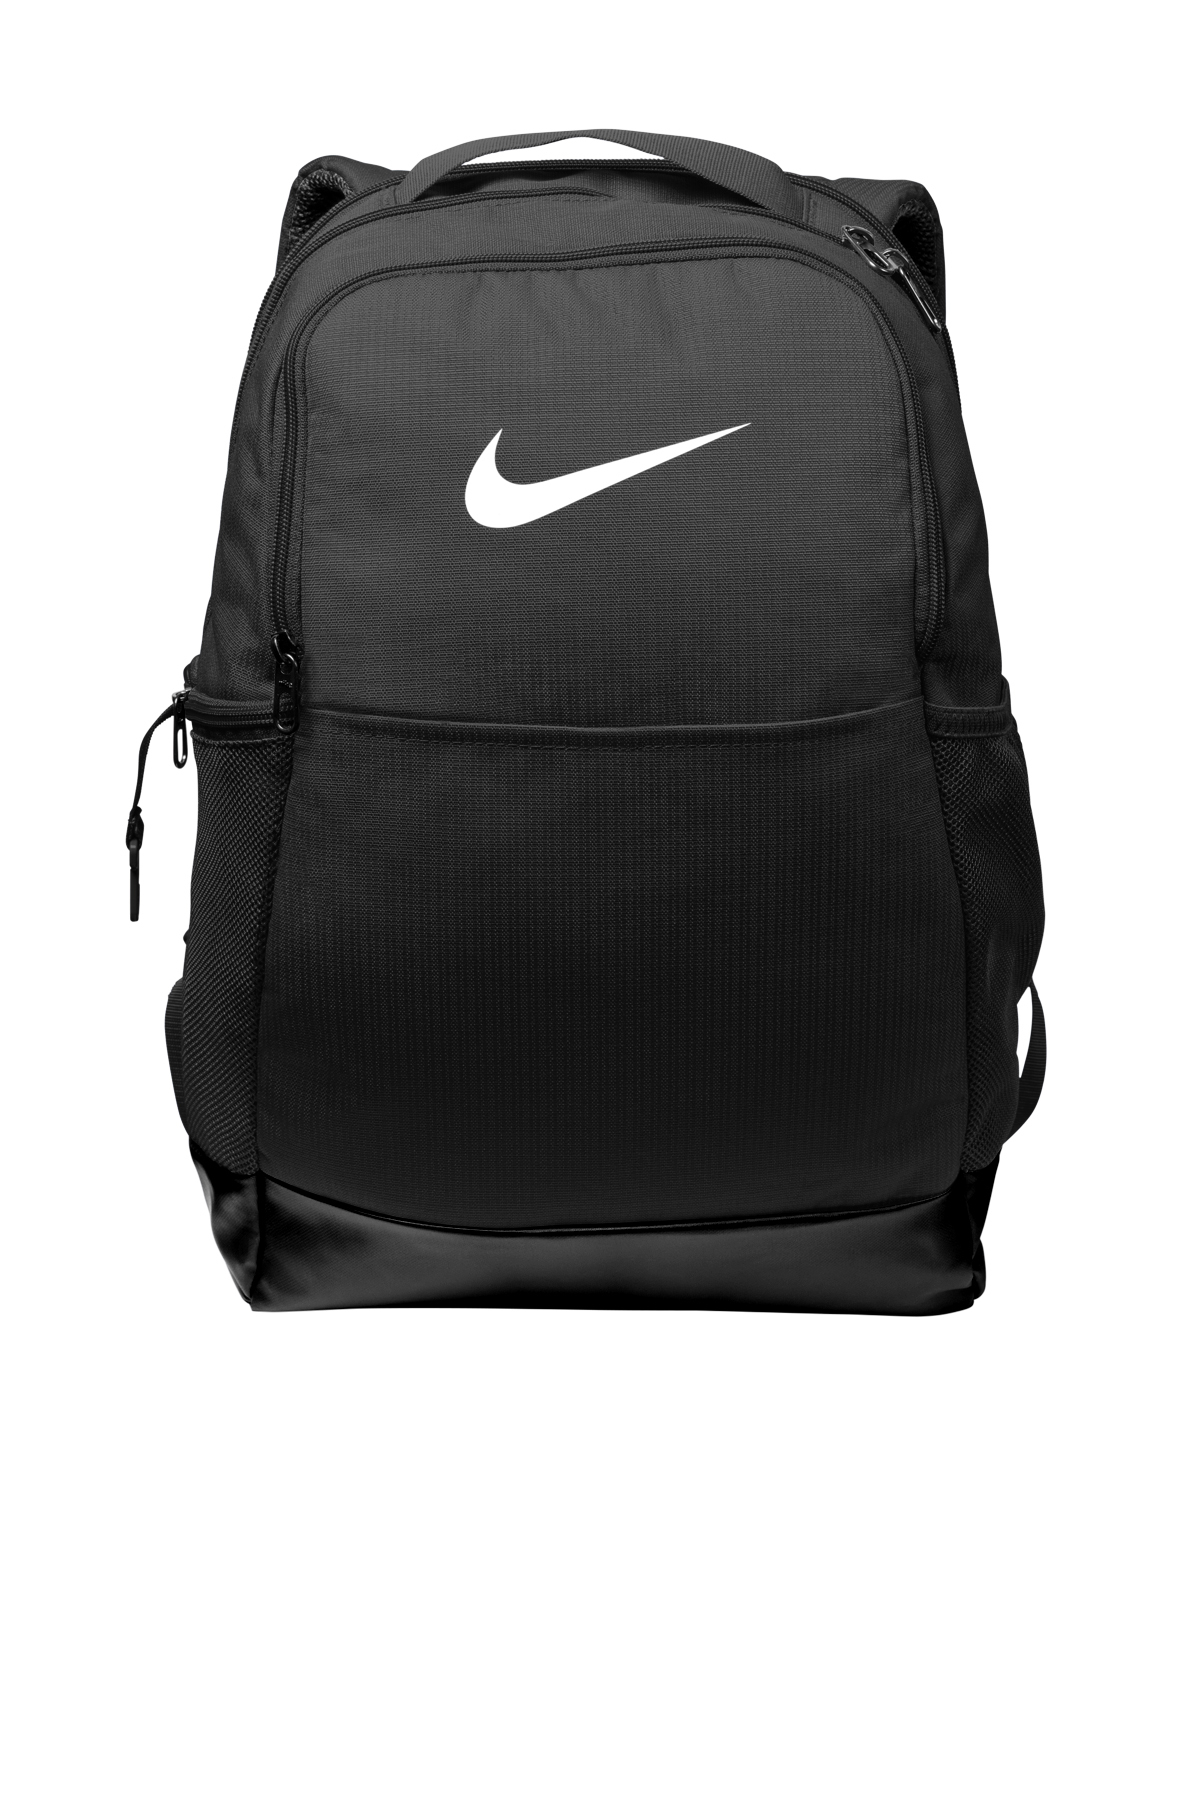 Nike Brasilia Medium | Product |